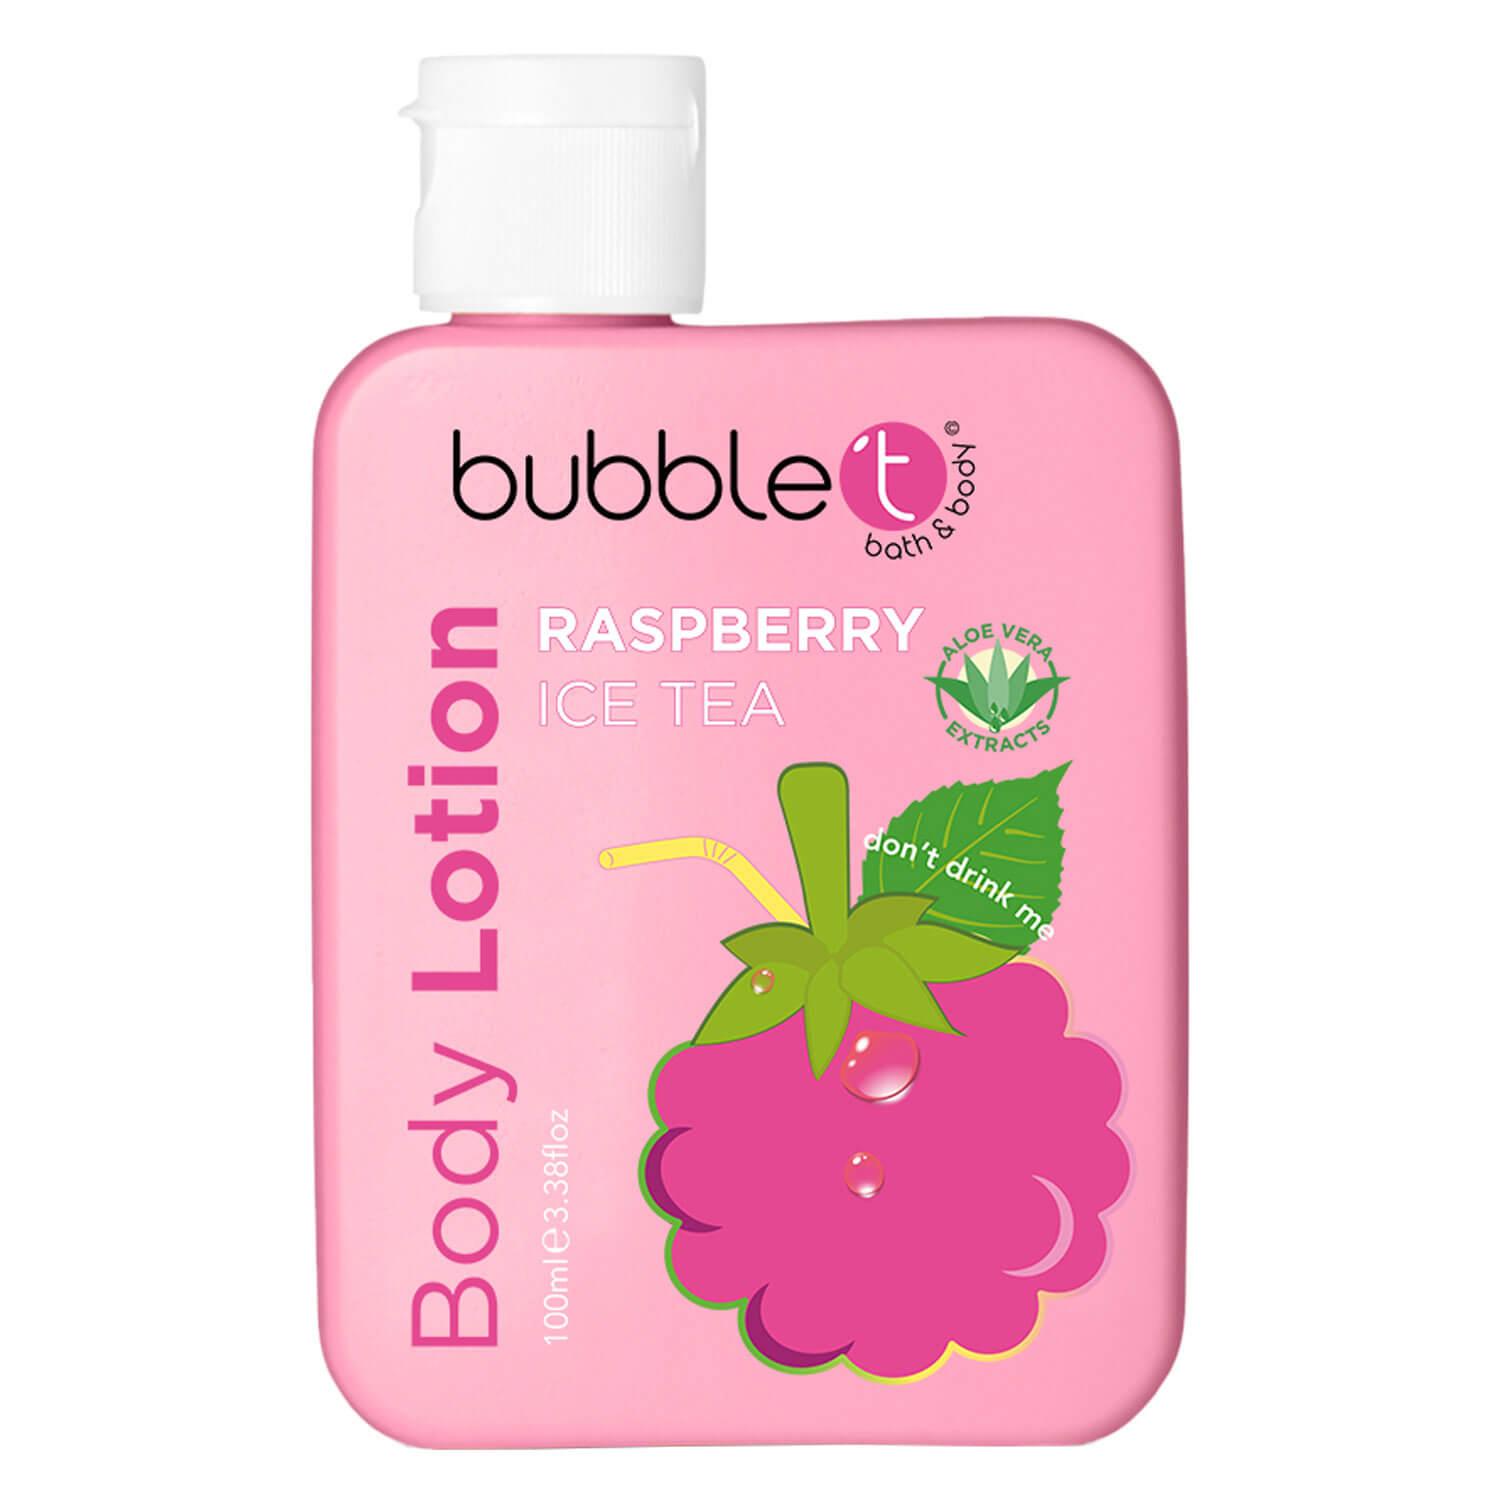 bubble t - Raspberry Ice Tea Body Lotion